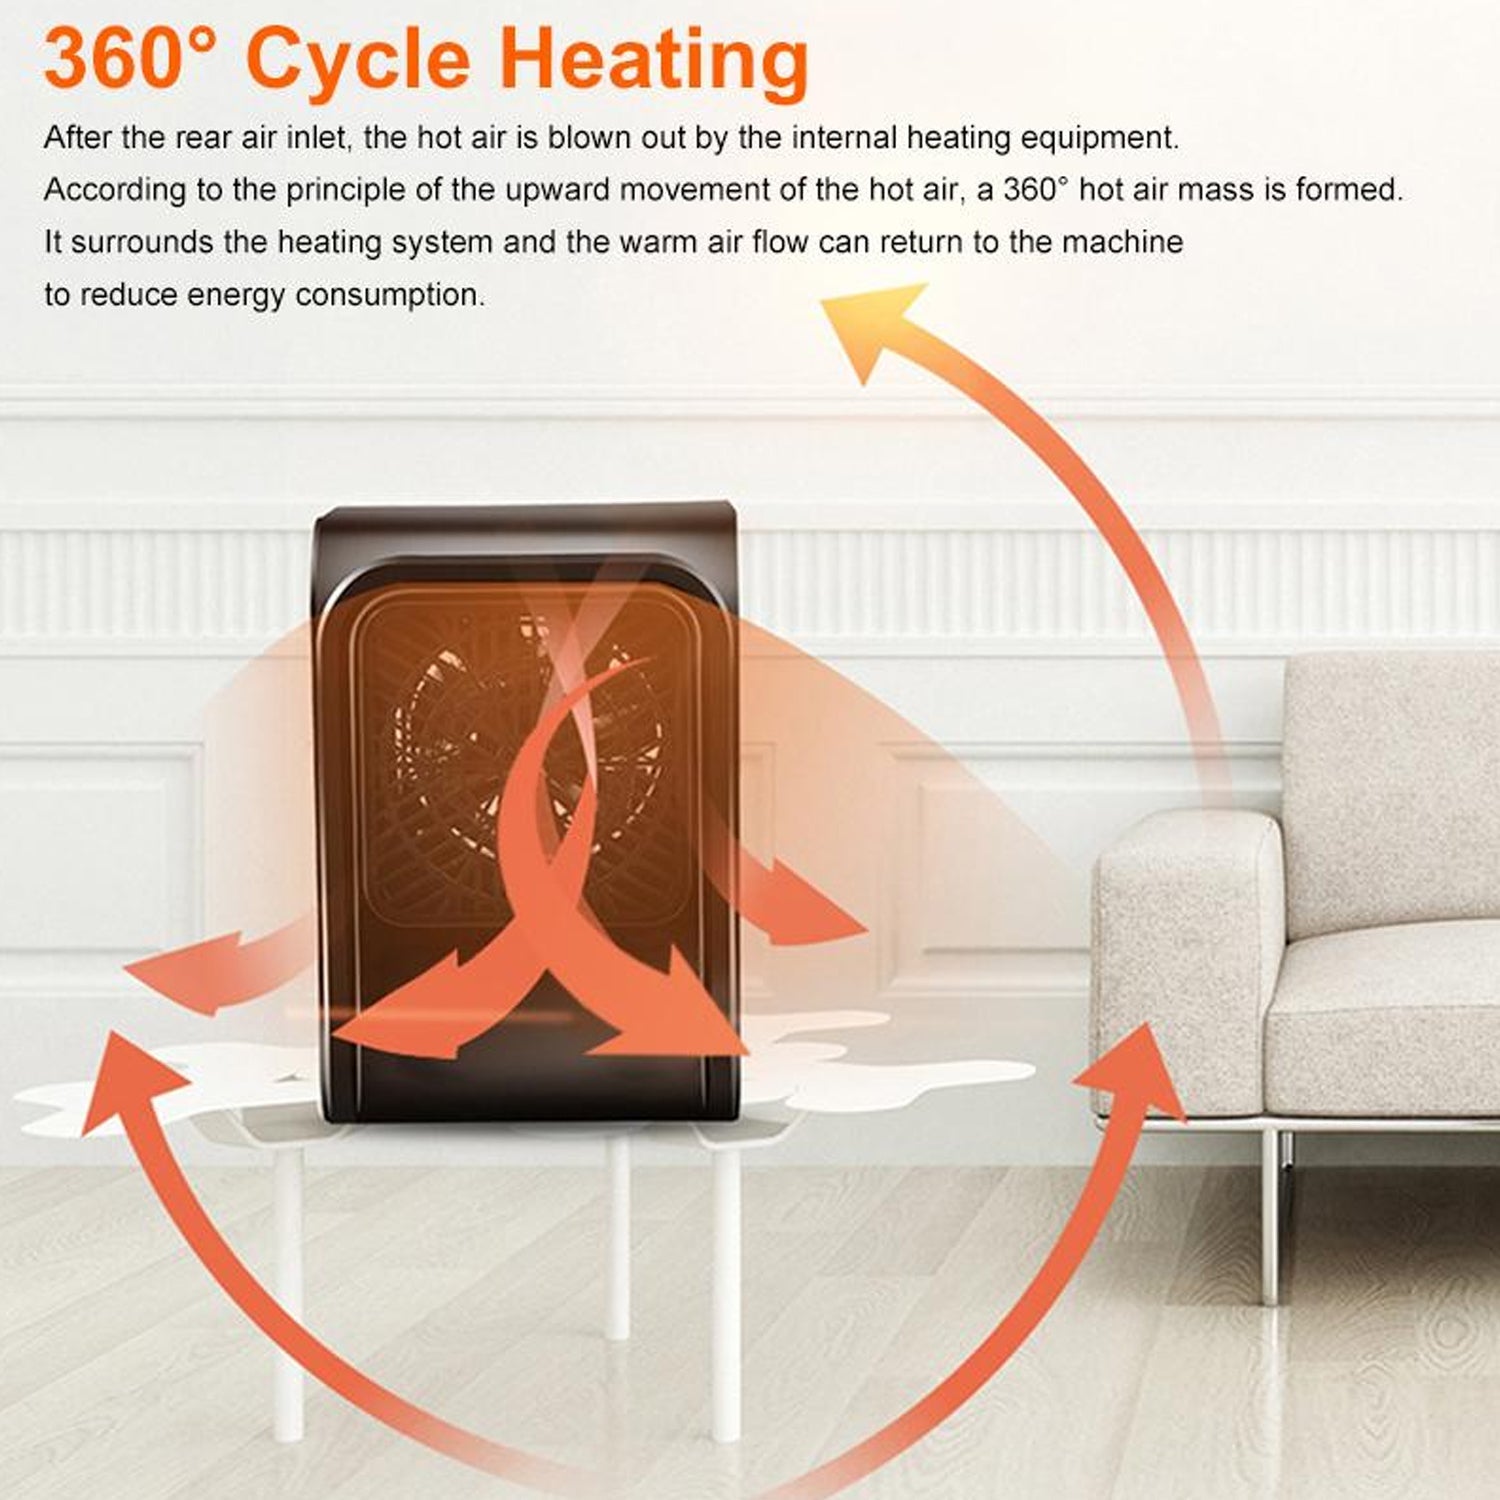 6683 Room Heater 220V Brown Box Heater For Office & Bedroom Use Heater DeoDap